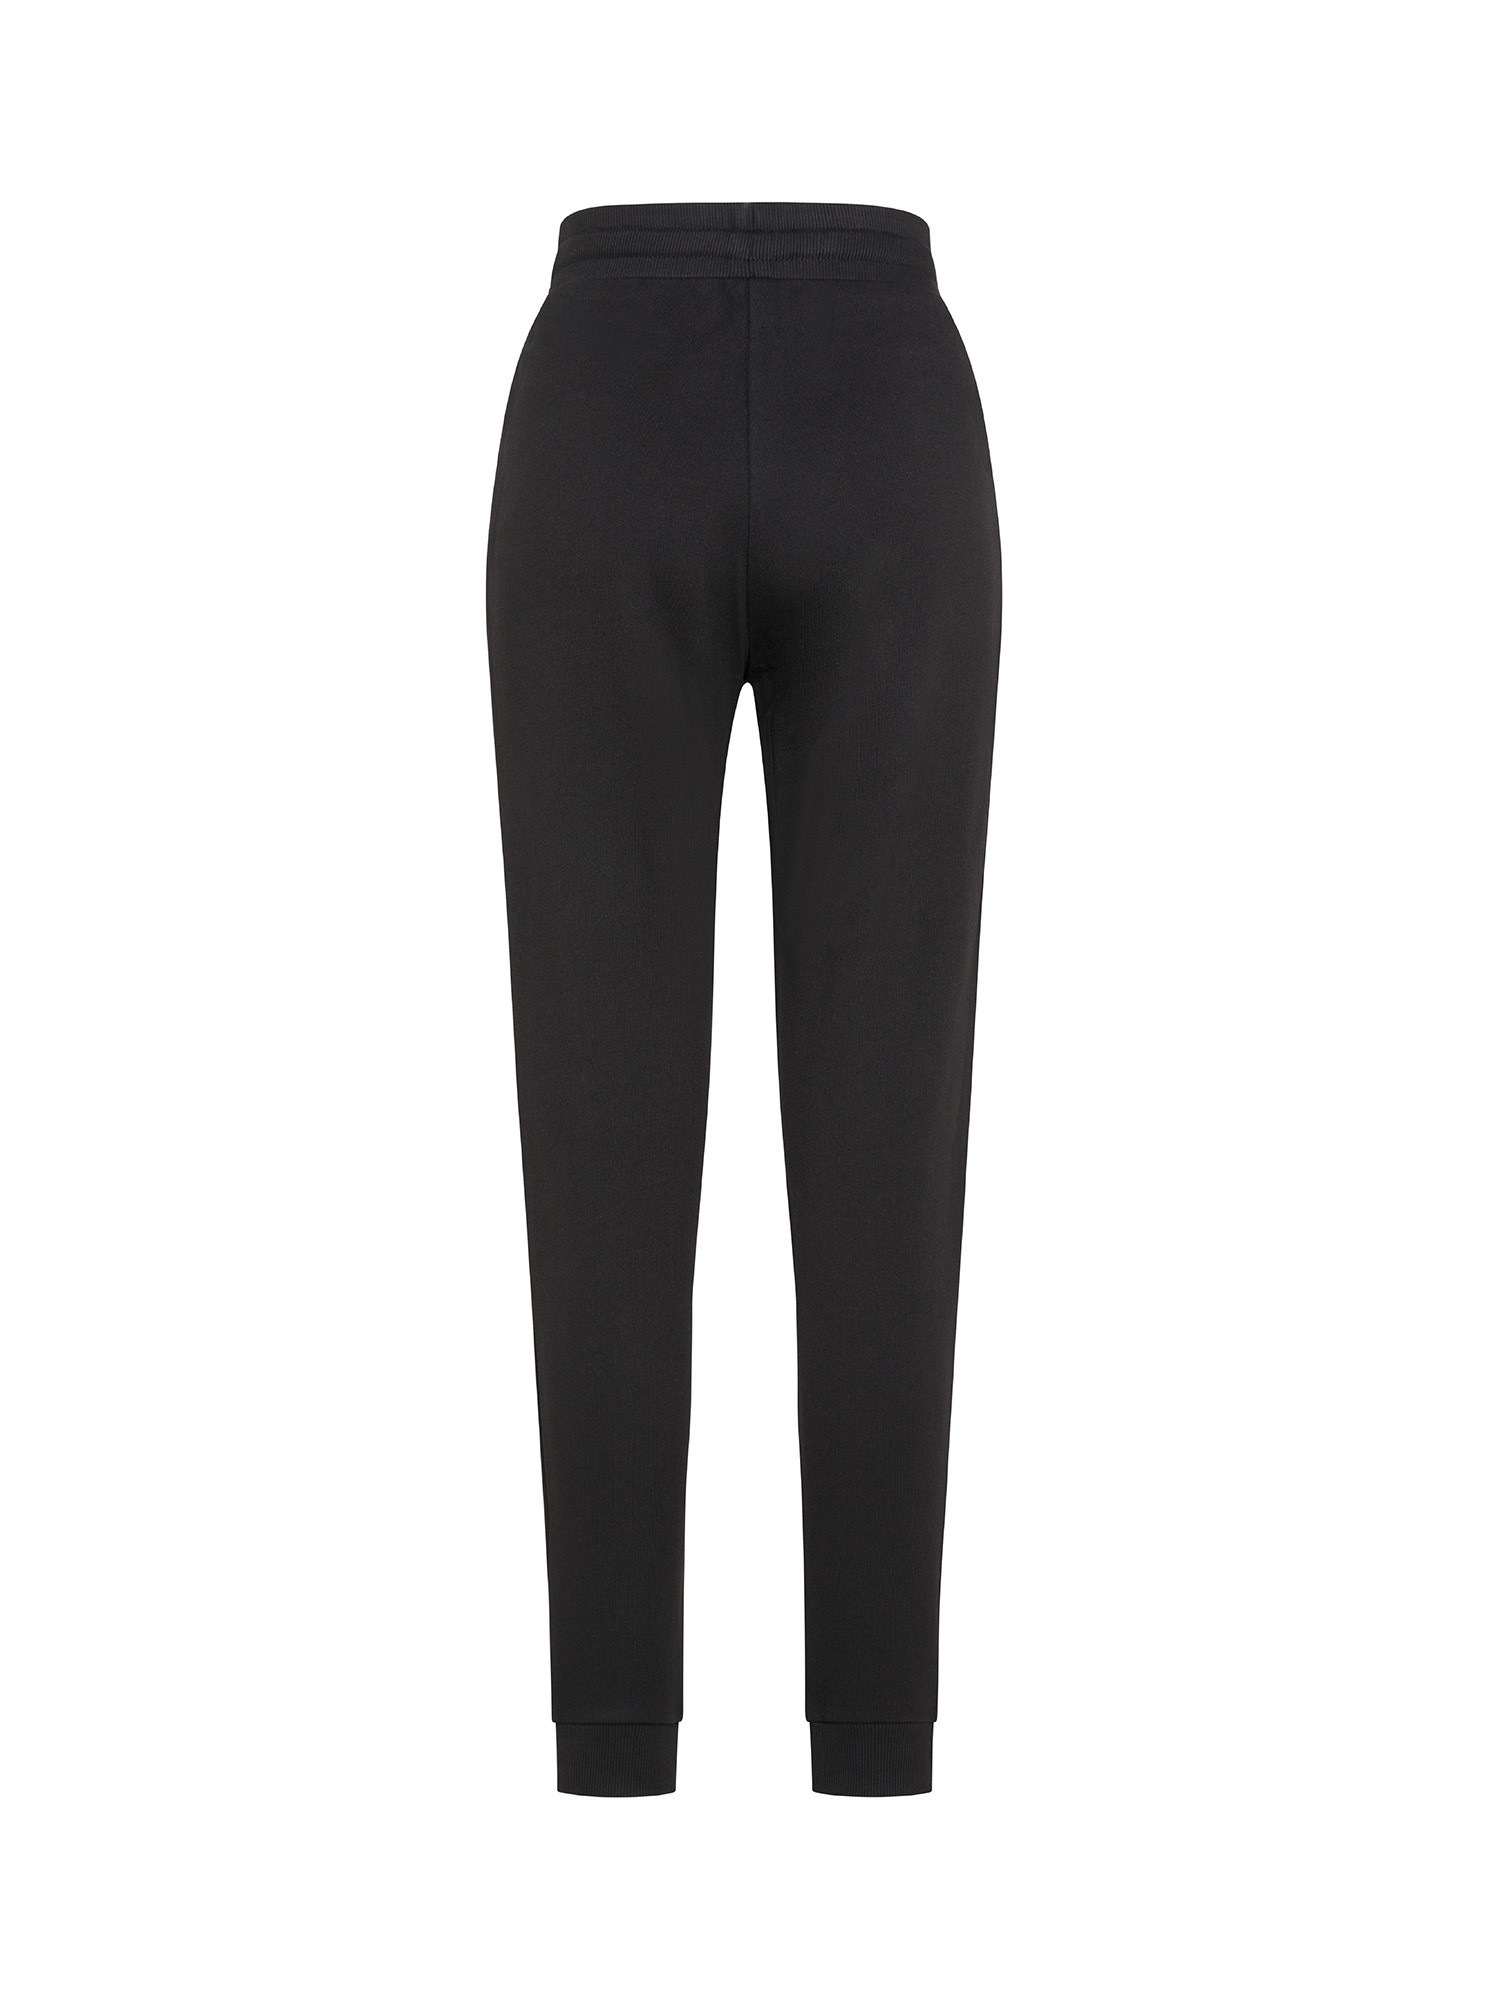 Armani Exchange - Sweatpants in cotton fleece, Black, large image number 1